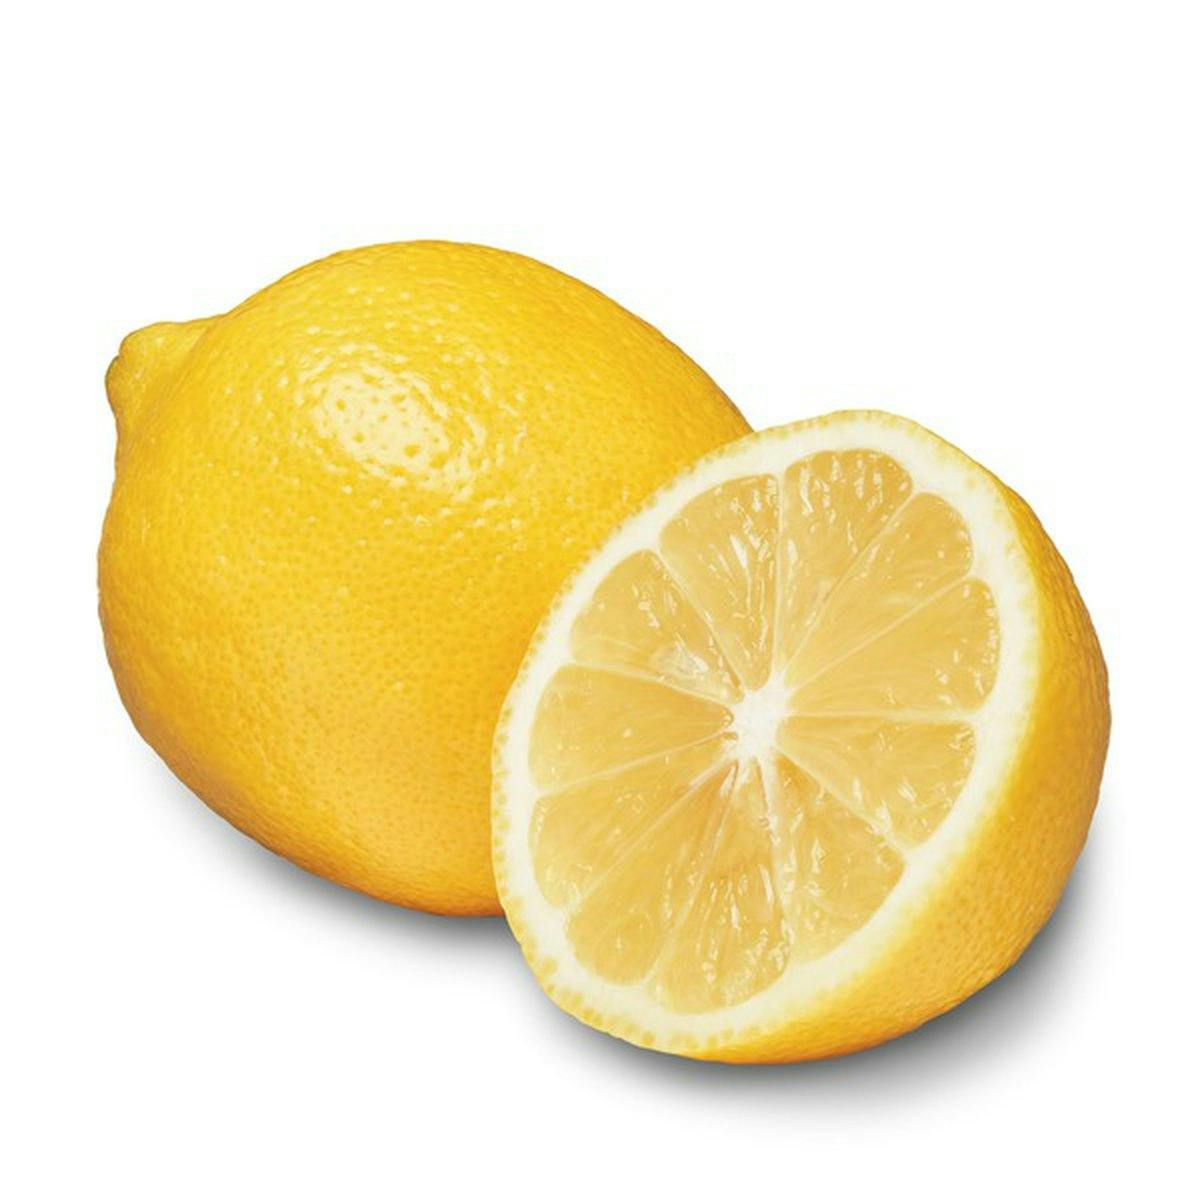 meyer lemons preferably(or limes)